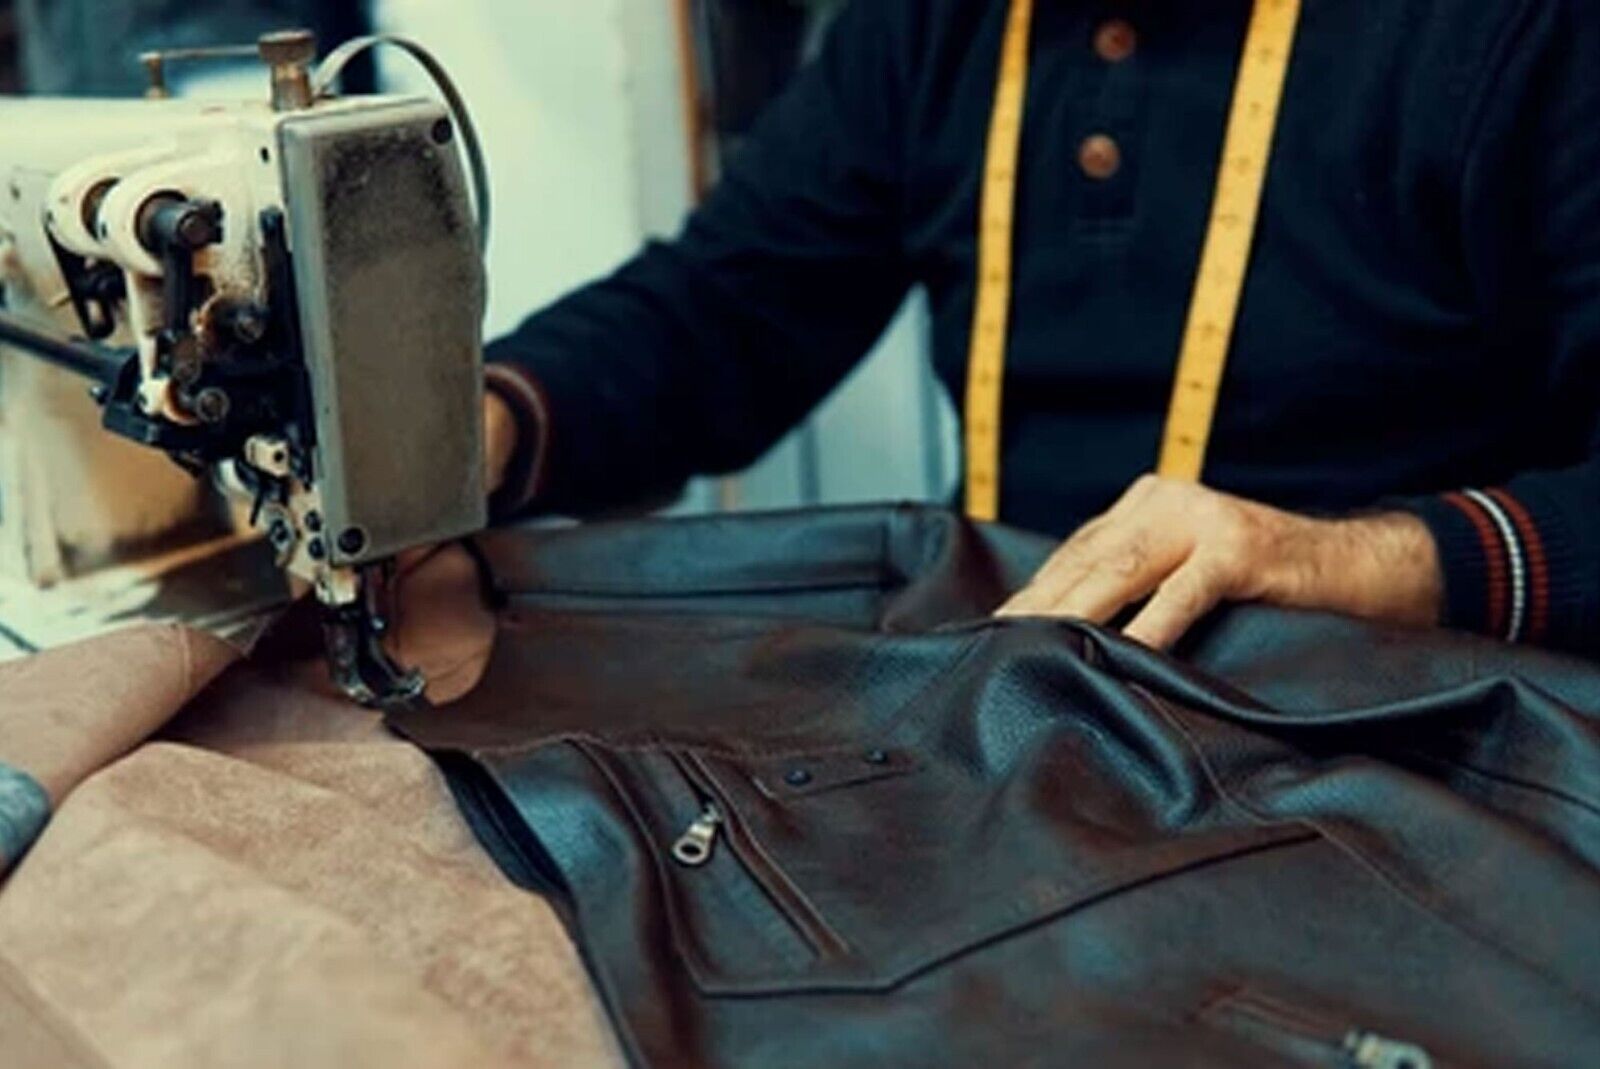 Tailor Made Men's Genuine Black Sheepskin Leather Flying Pilot Stylish Jackets Coat